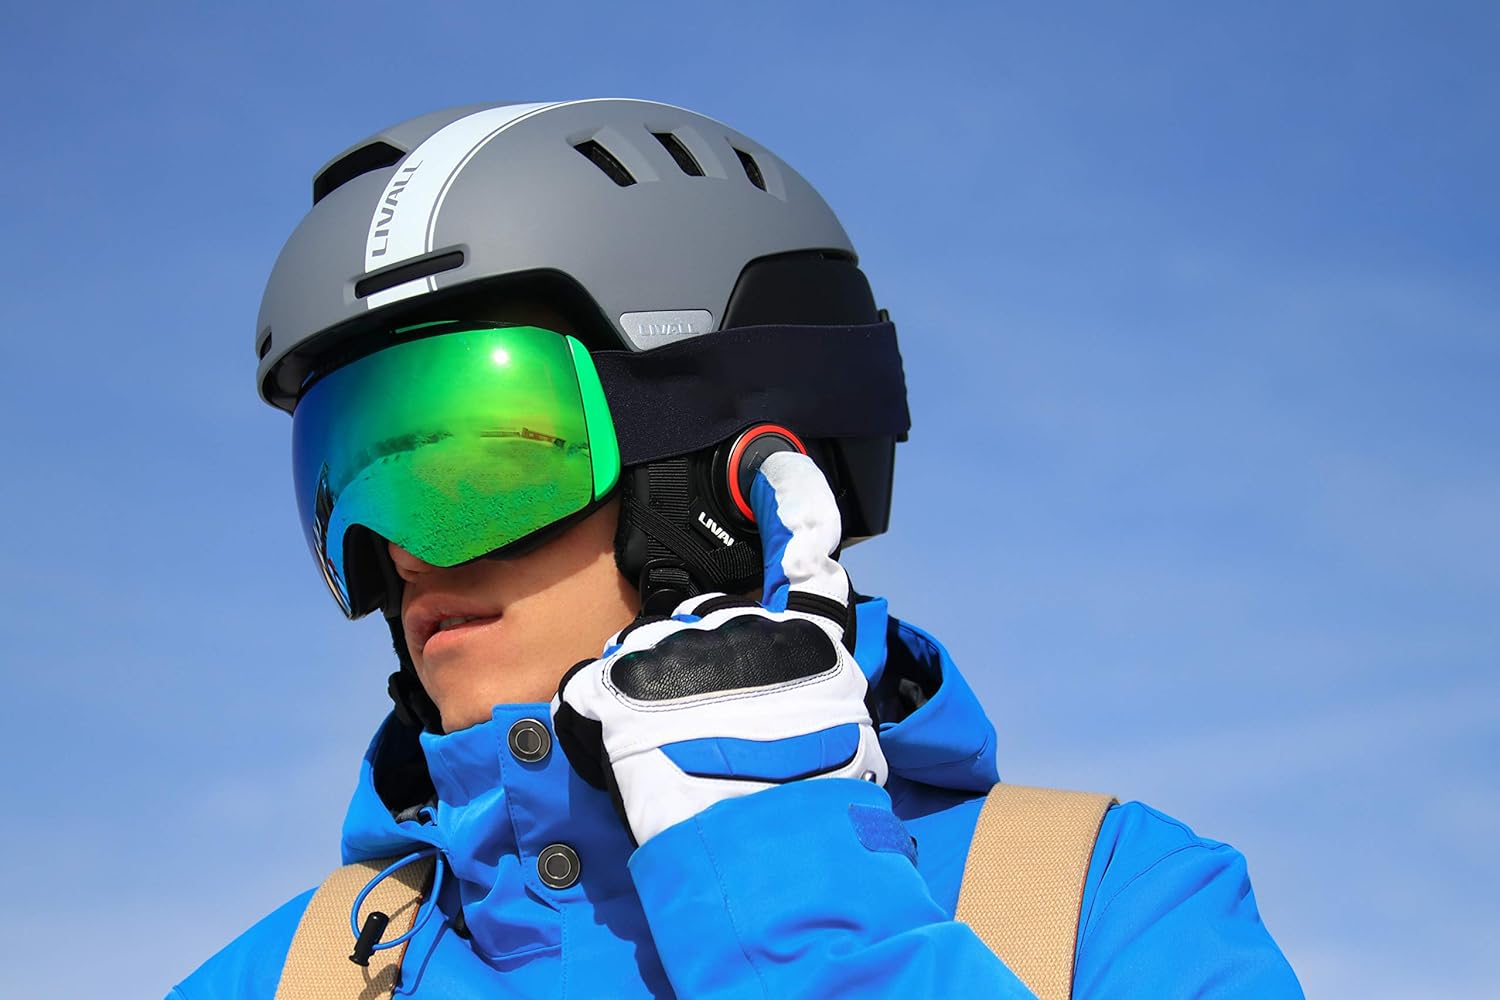 LIVALL RS1 Smart Ski Helmet: Safety Meets Innovation